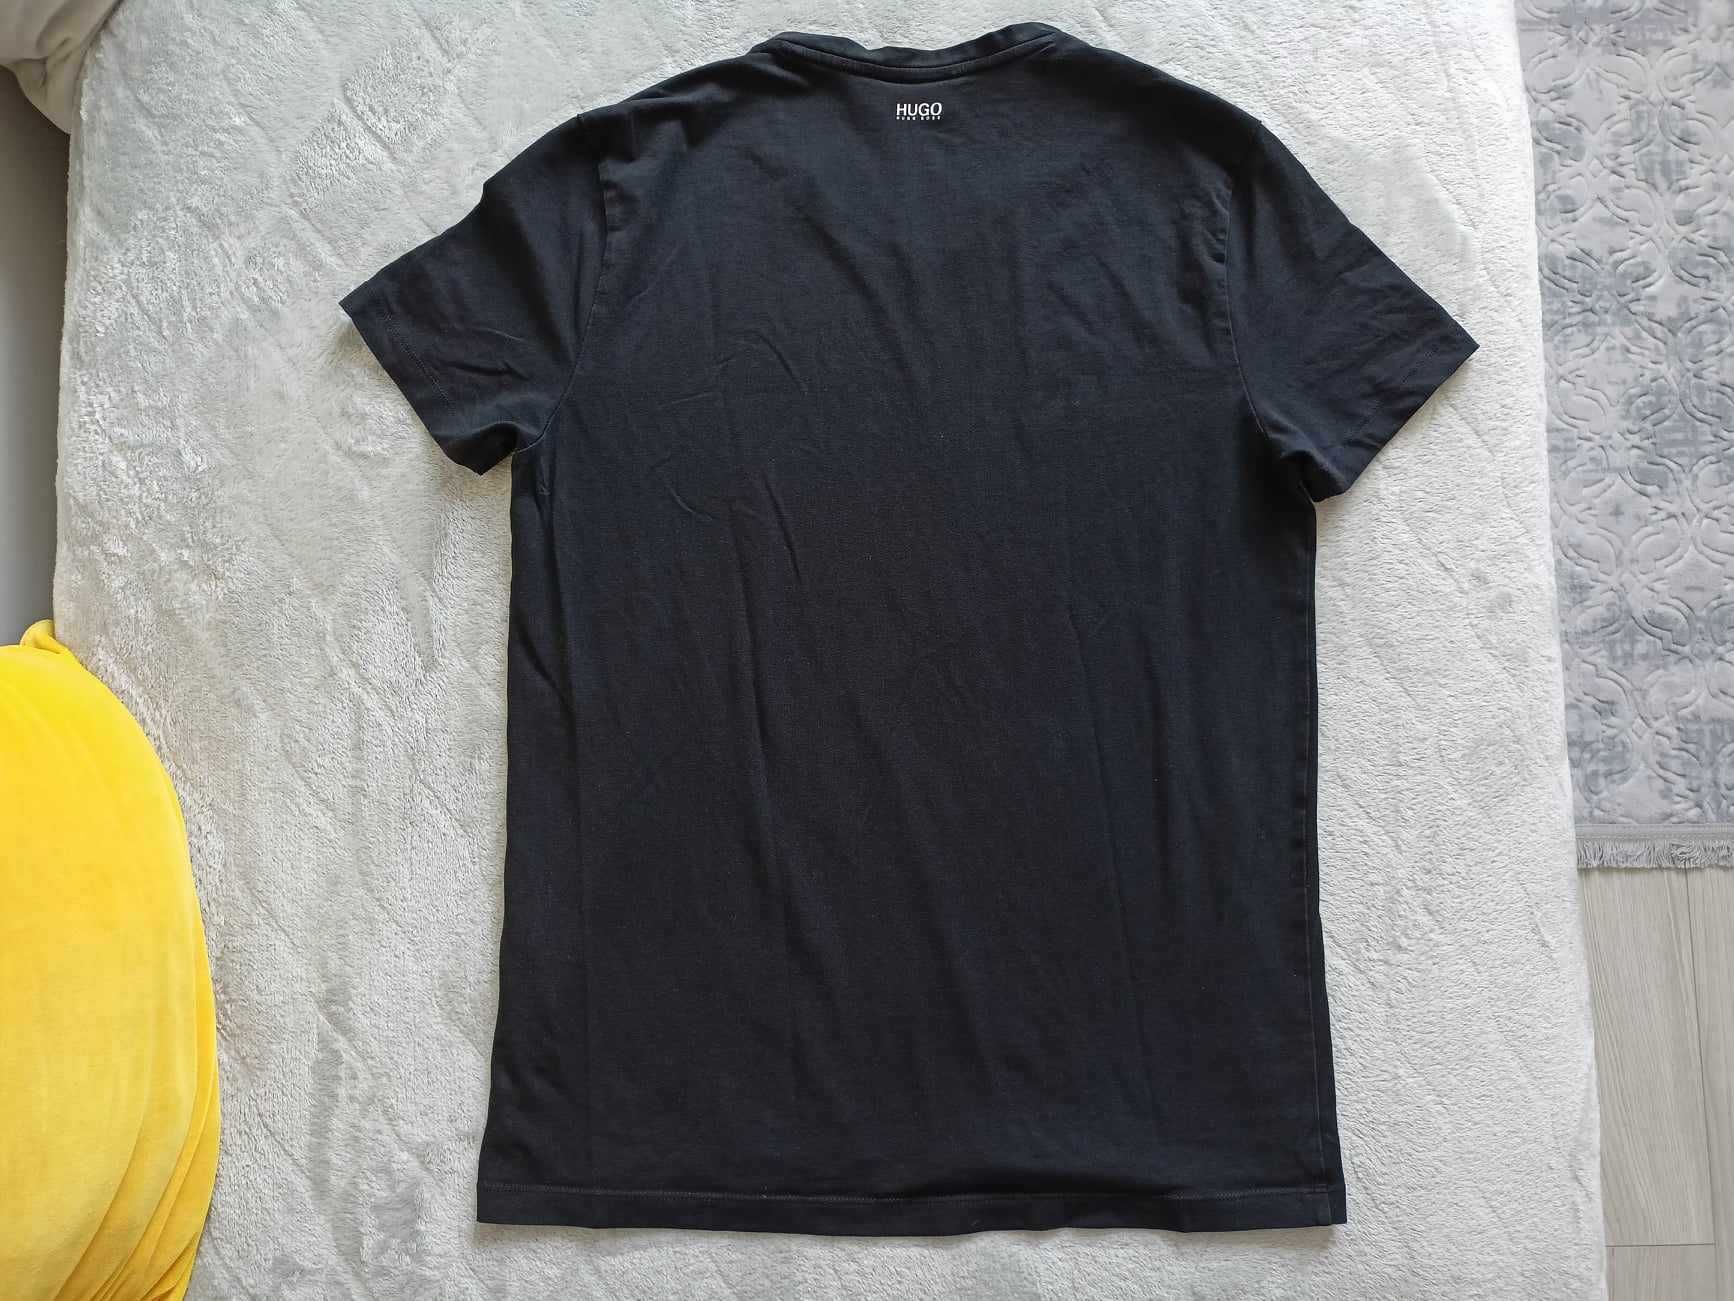 Męski t-shirt/koszulka Hugo Boss - czarny, rozmiar S